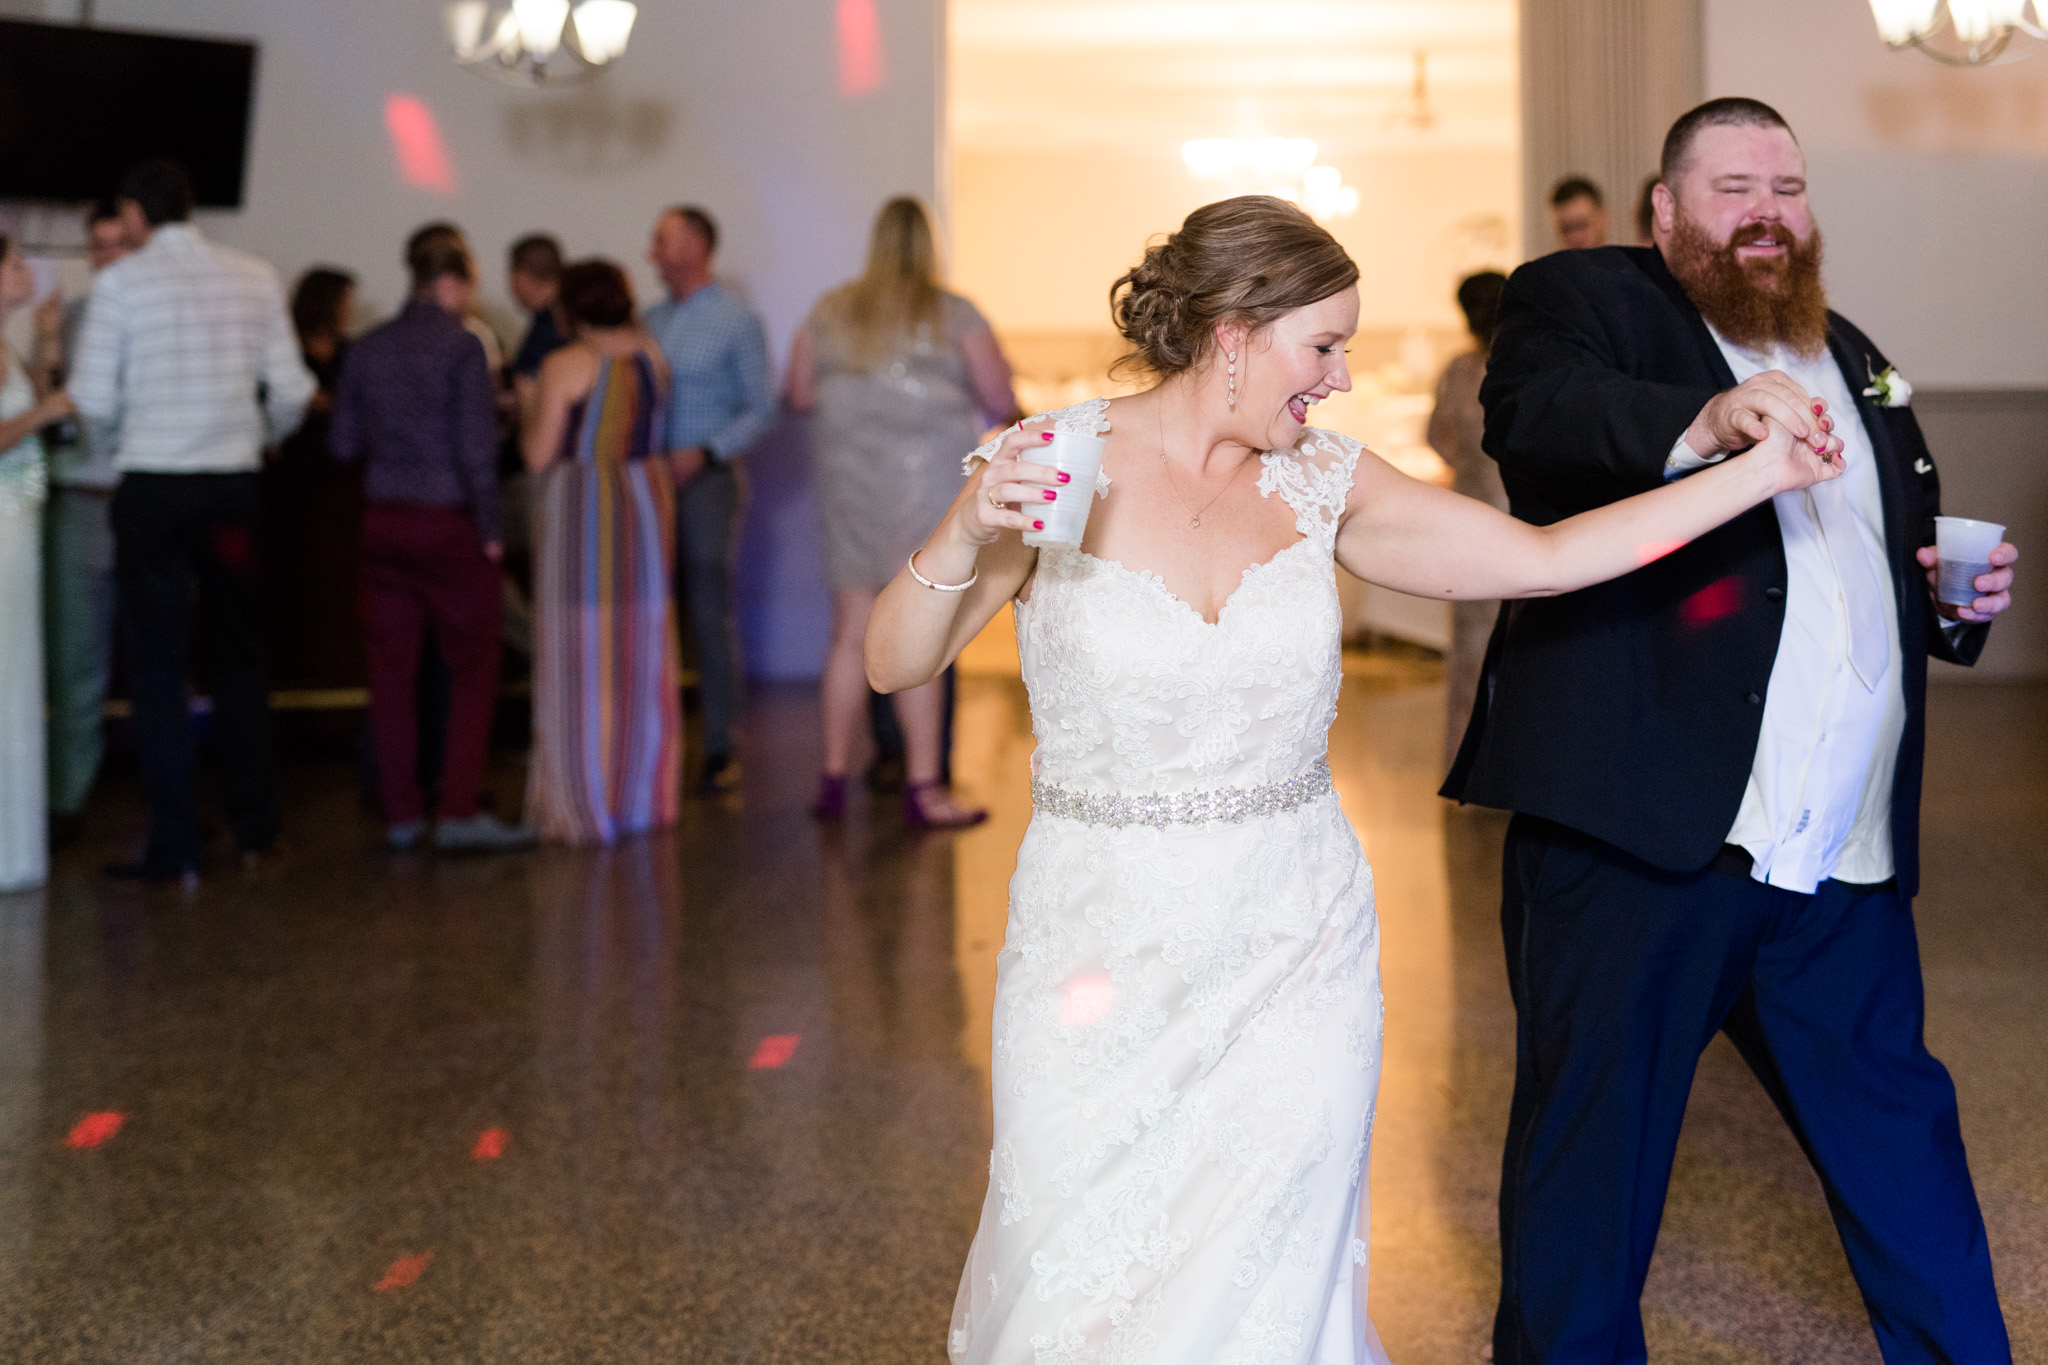 Groom twirls bride at wedding reception.